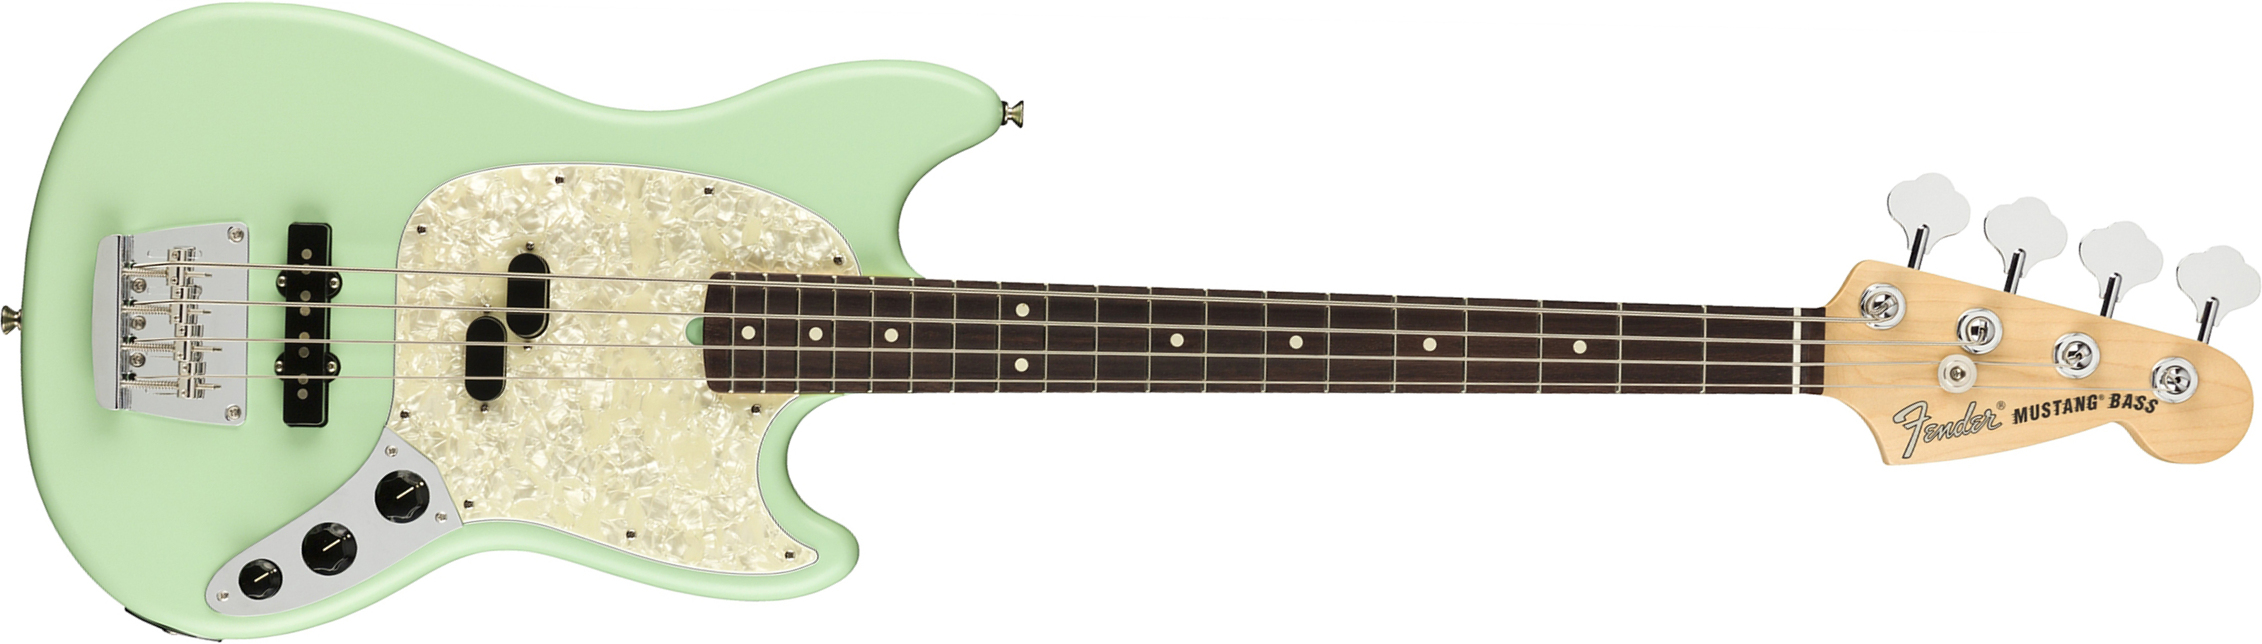 Fender Mustang Bass American Performer Usa Rw - Satin Surf Green - Short scale elektrische bas - Main picture